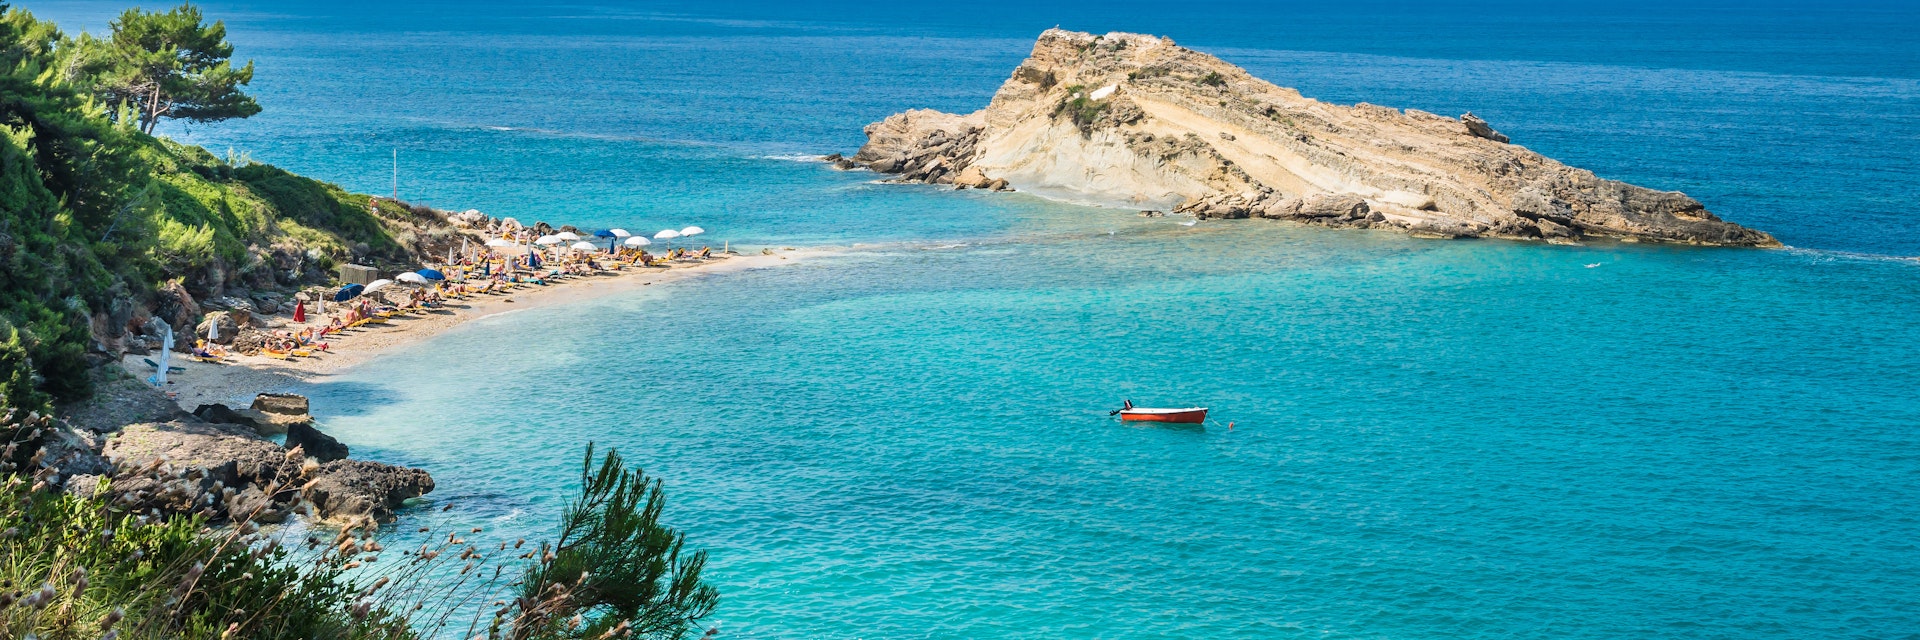 Beautiful view of Turkopodaro Beach on Kefalonia, Ionian Islands, Greece